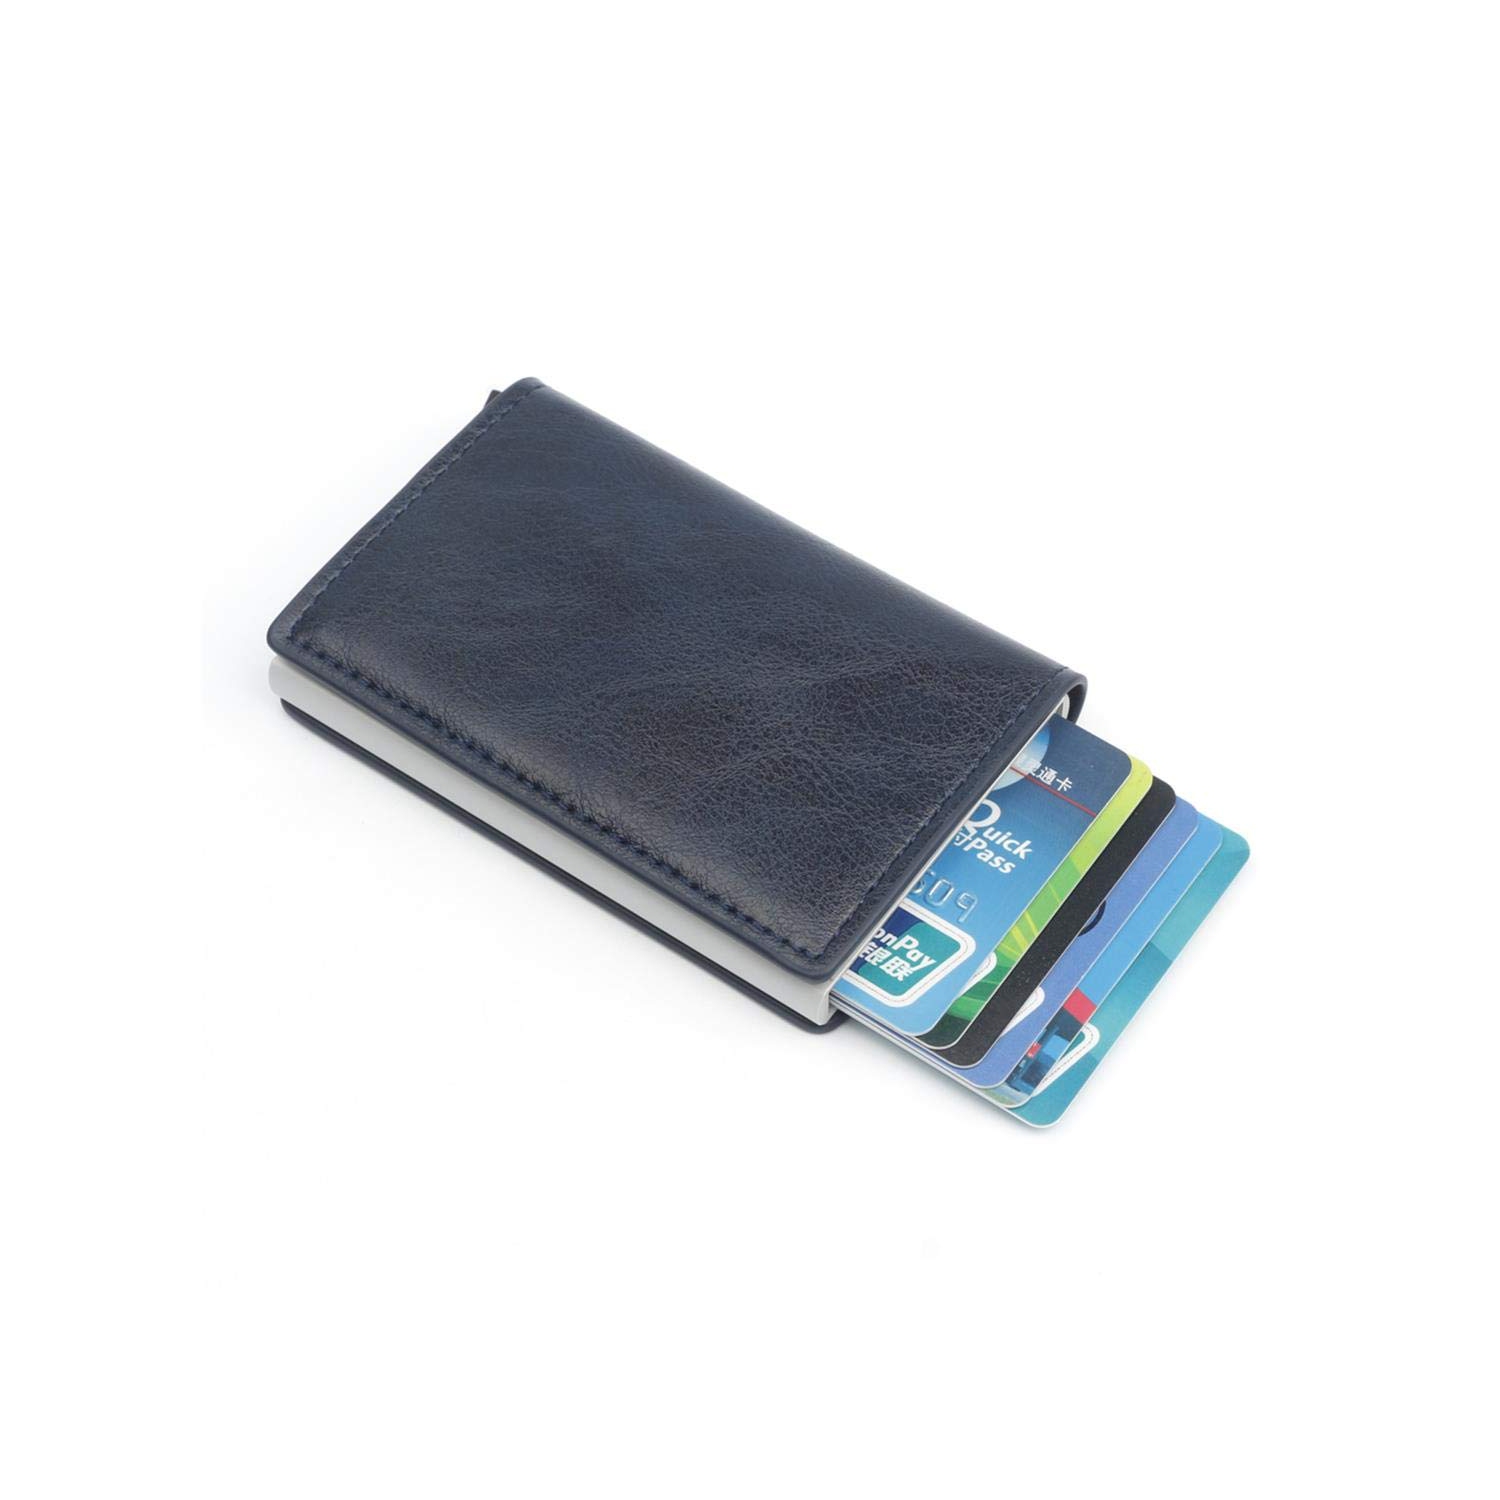 CHJGLNL Men's Genuine Leather Wallet RFID Blocking Aluminum